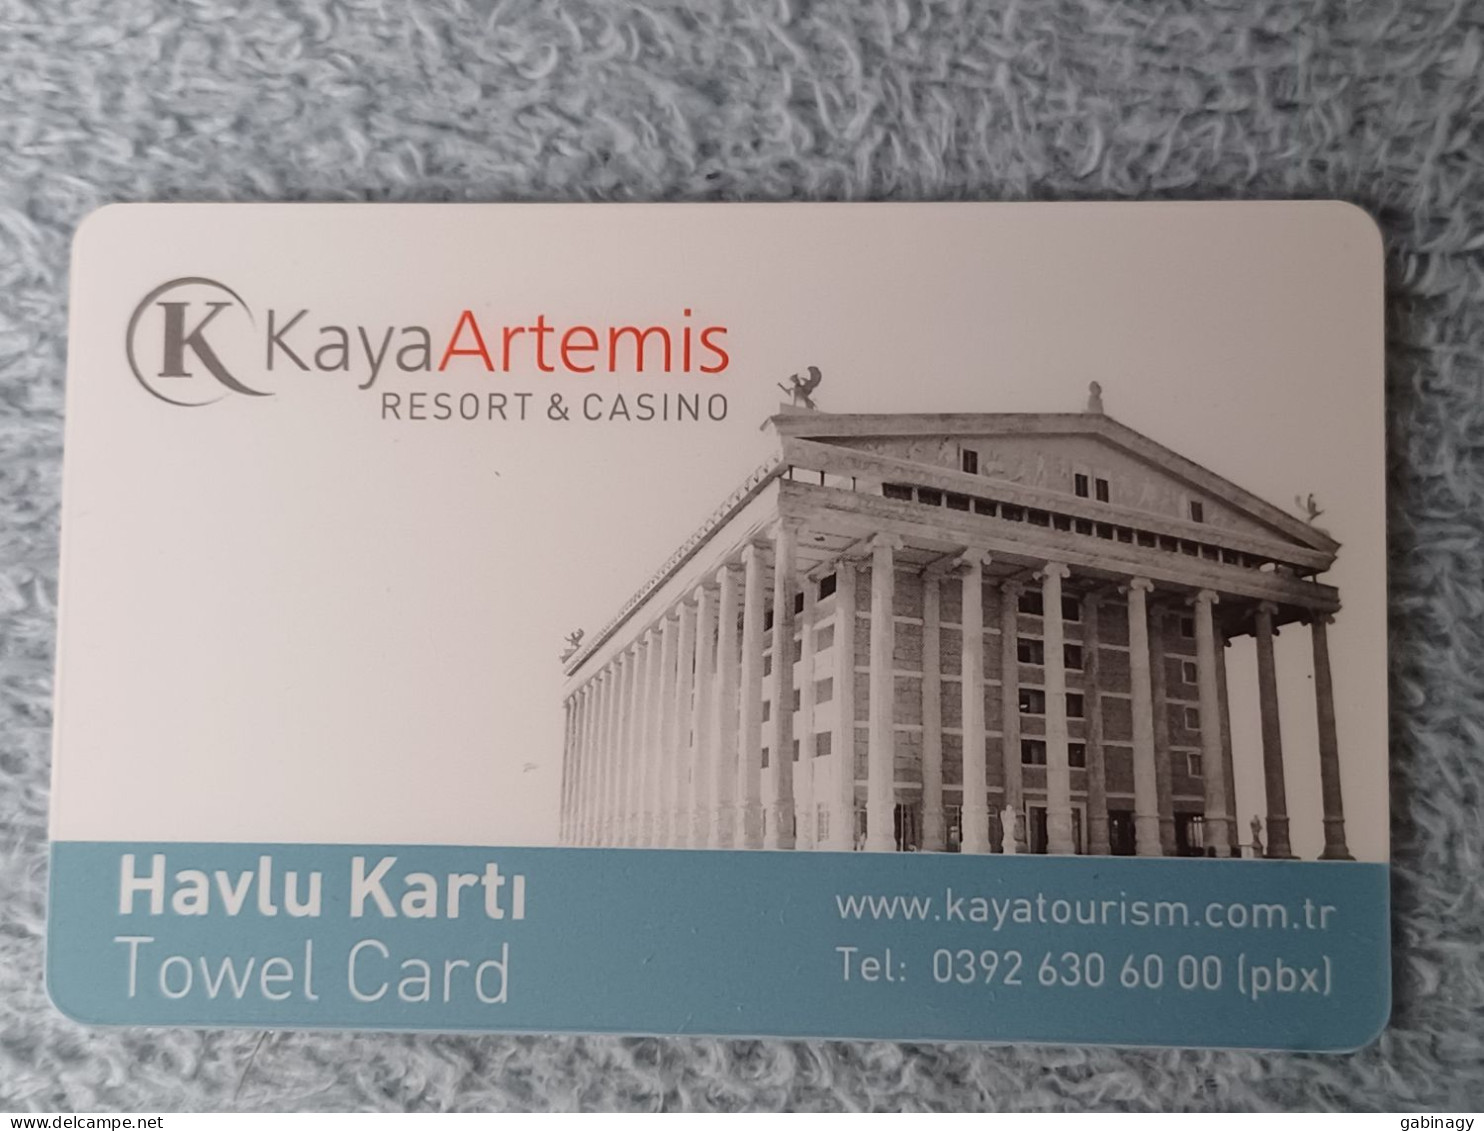 HOTEL KEYS - 2596 - TURKEY - KAYA ARTEMIS RESORT & CASINO - Hotelsleutels (kaarten)